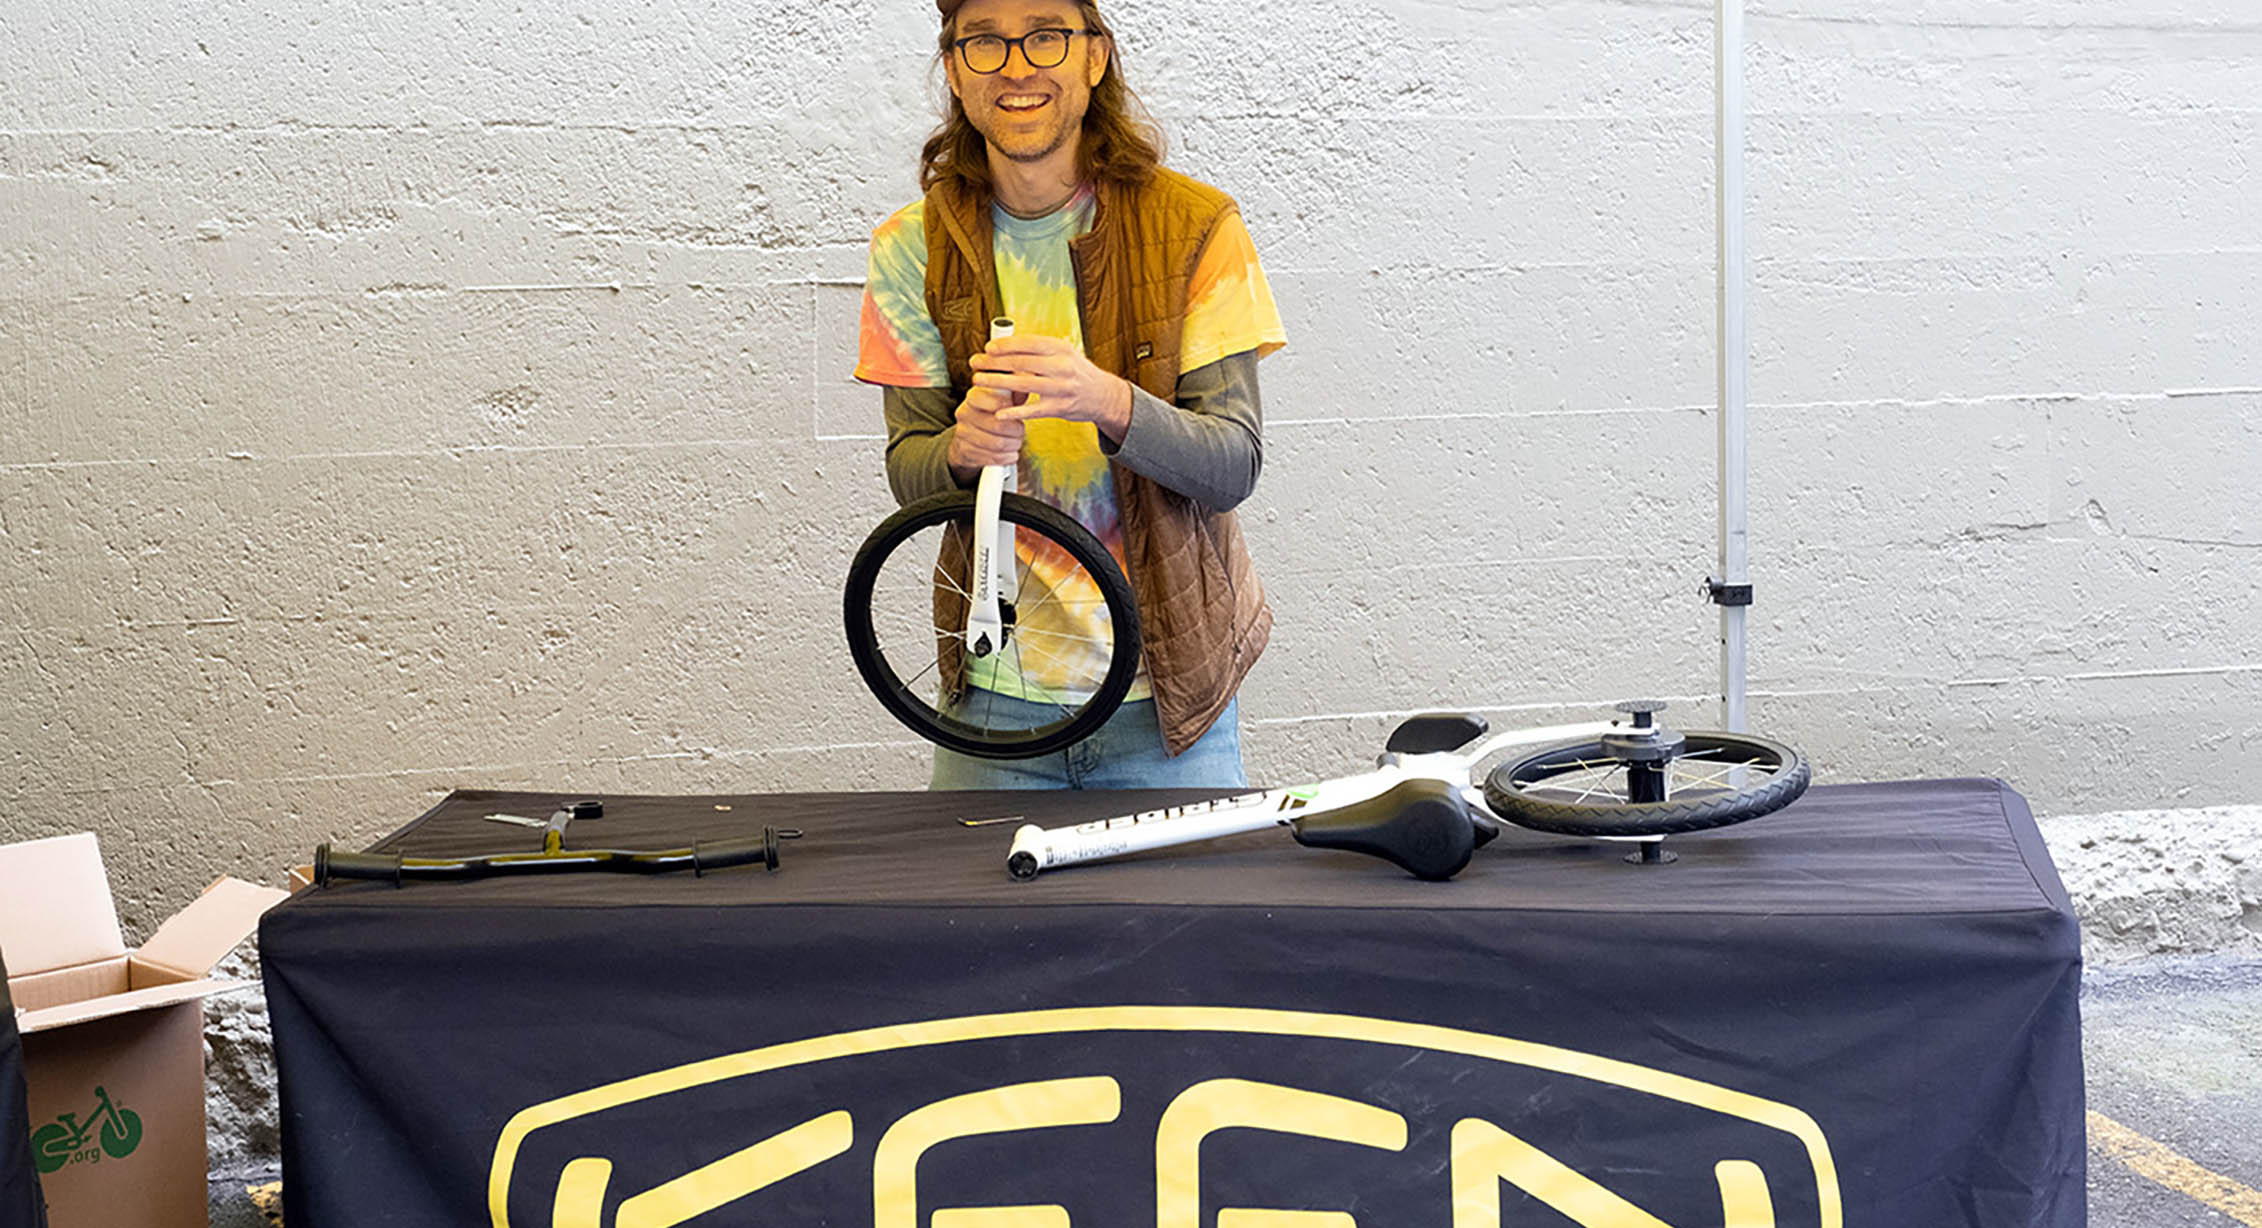 A KEEN employee building bikes for kindergartners